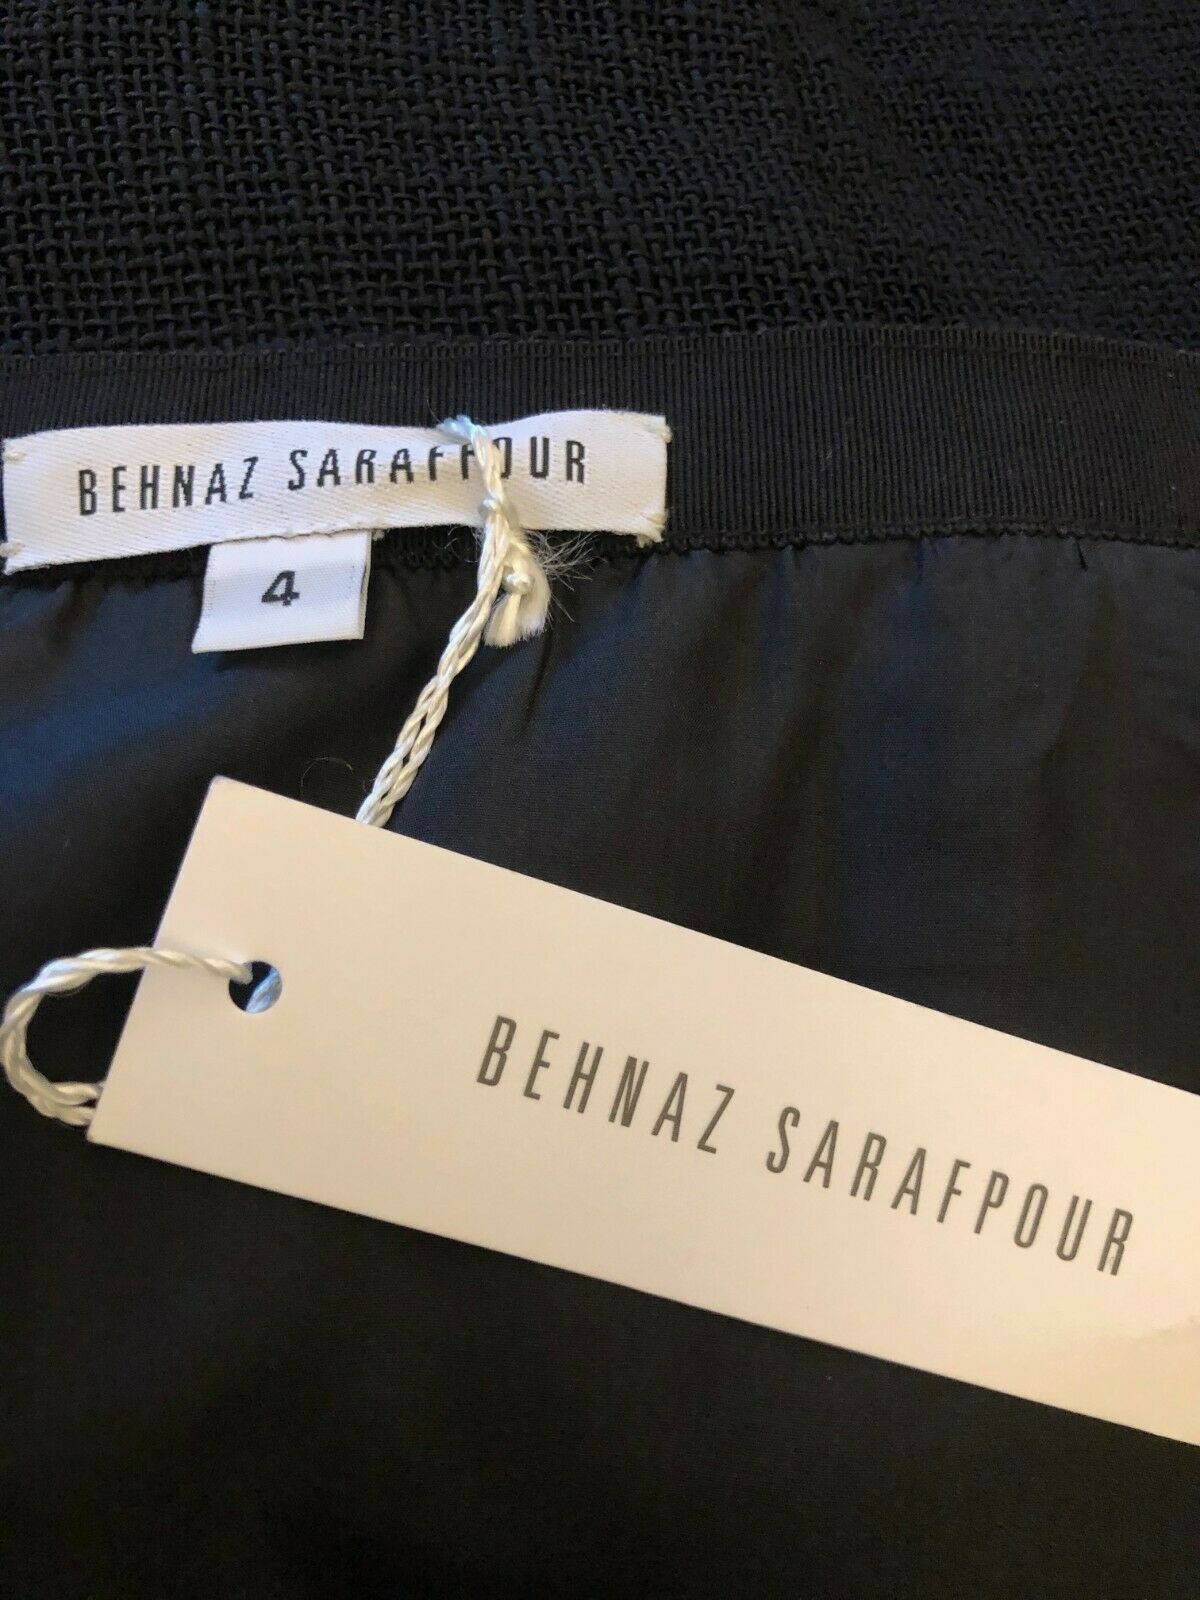 Behnaz Sarafpour Black Floral Mini Pencil Skirt UK 8 US 4 EU 36 Timeless Fashions